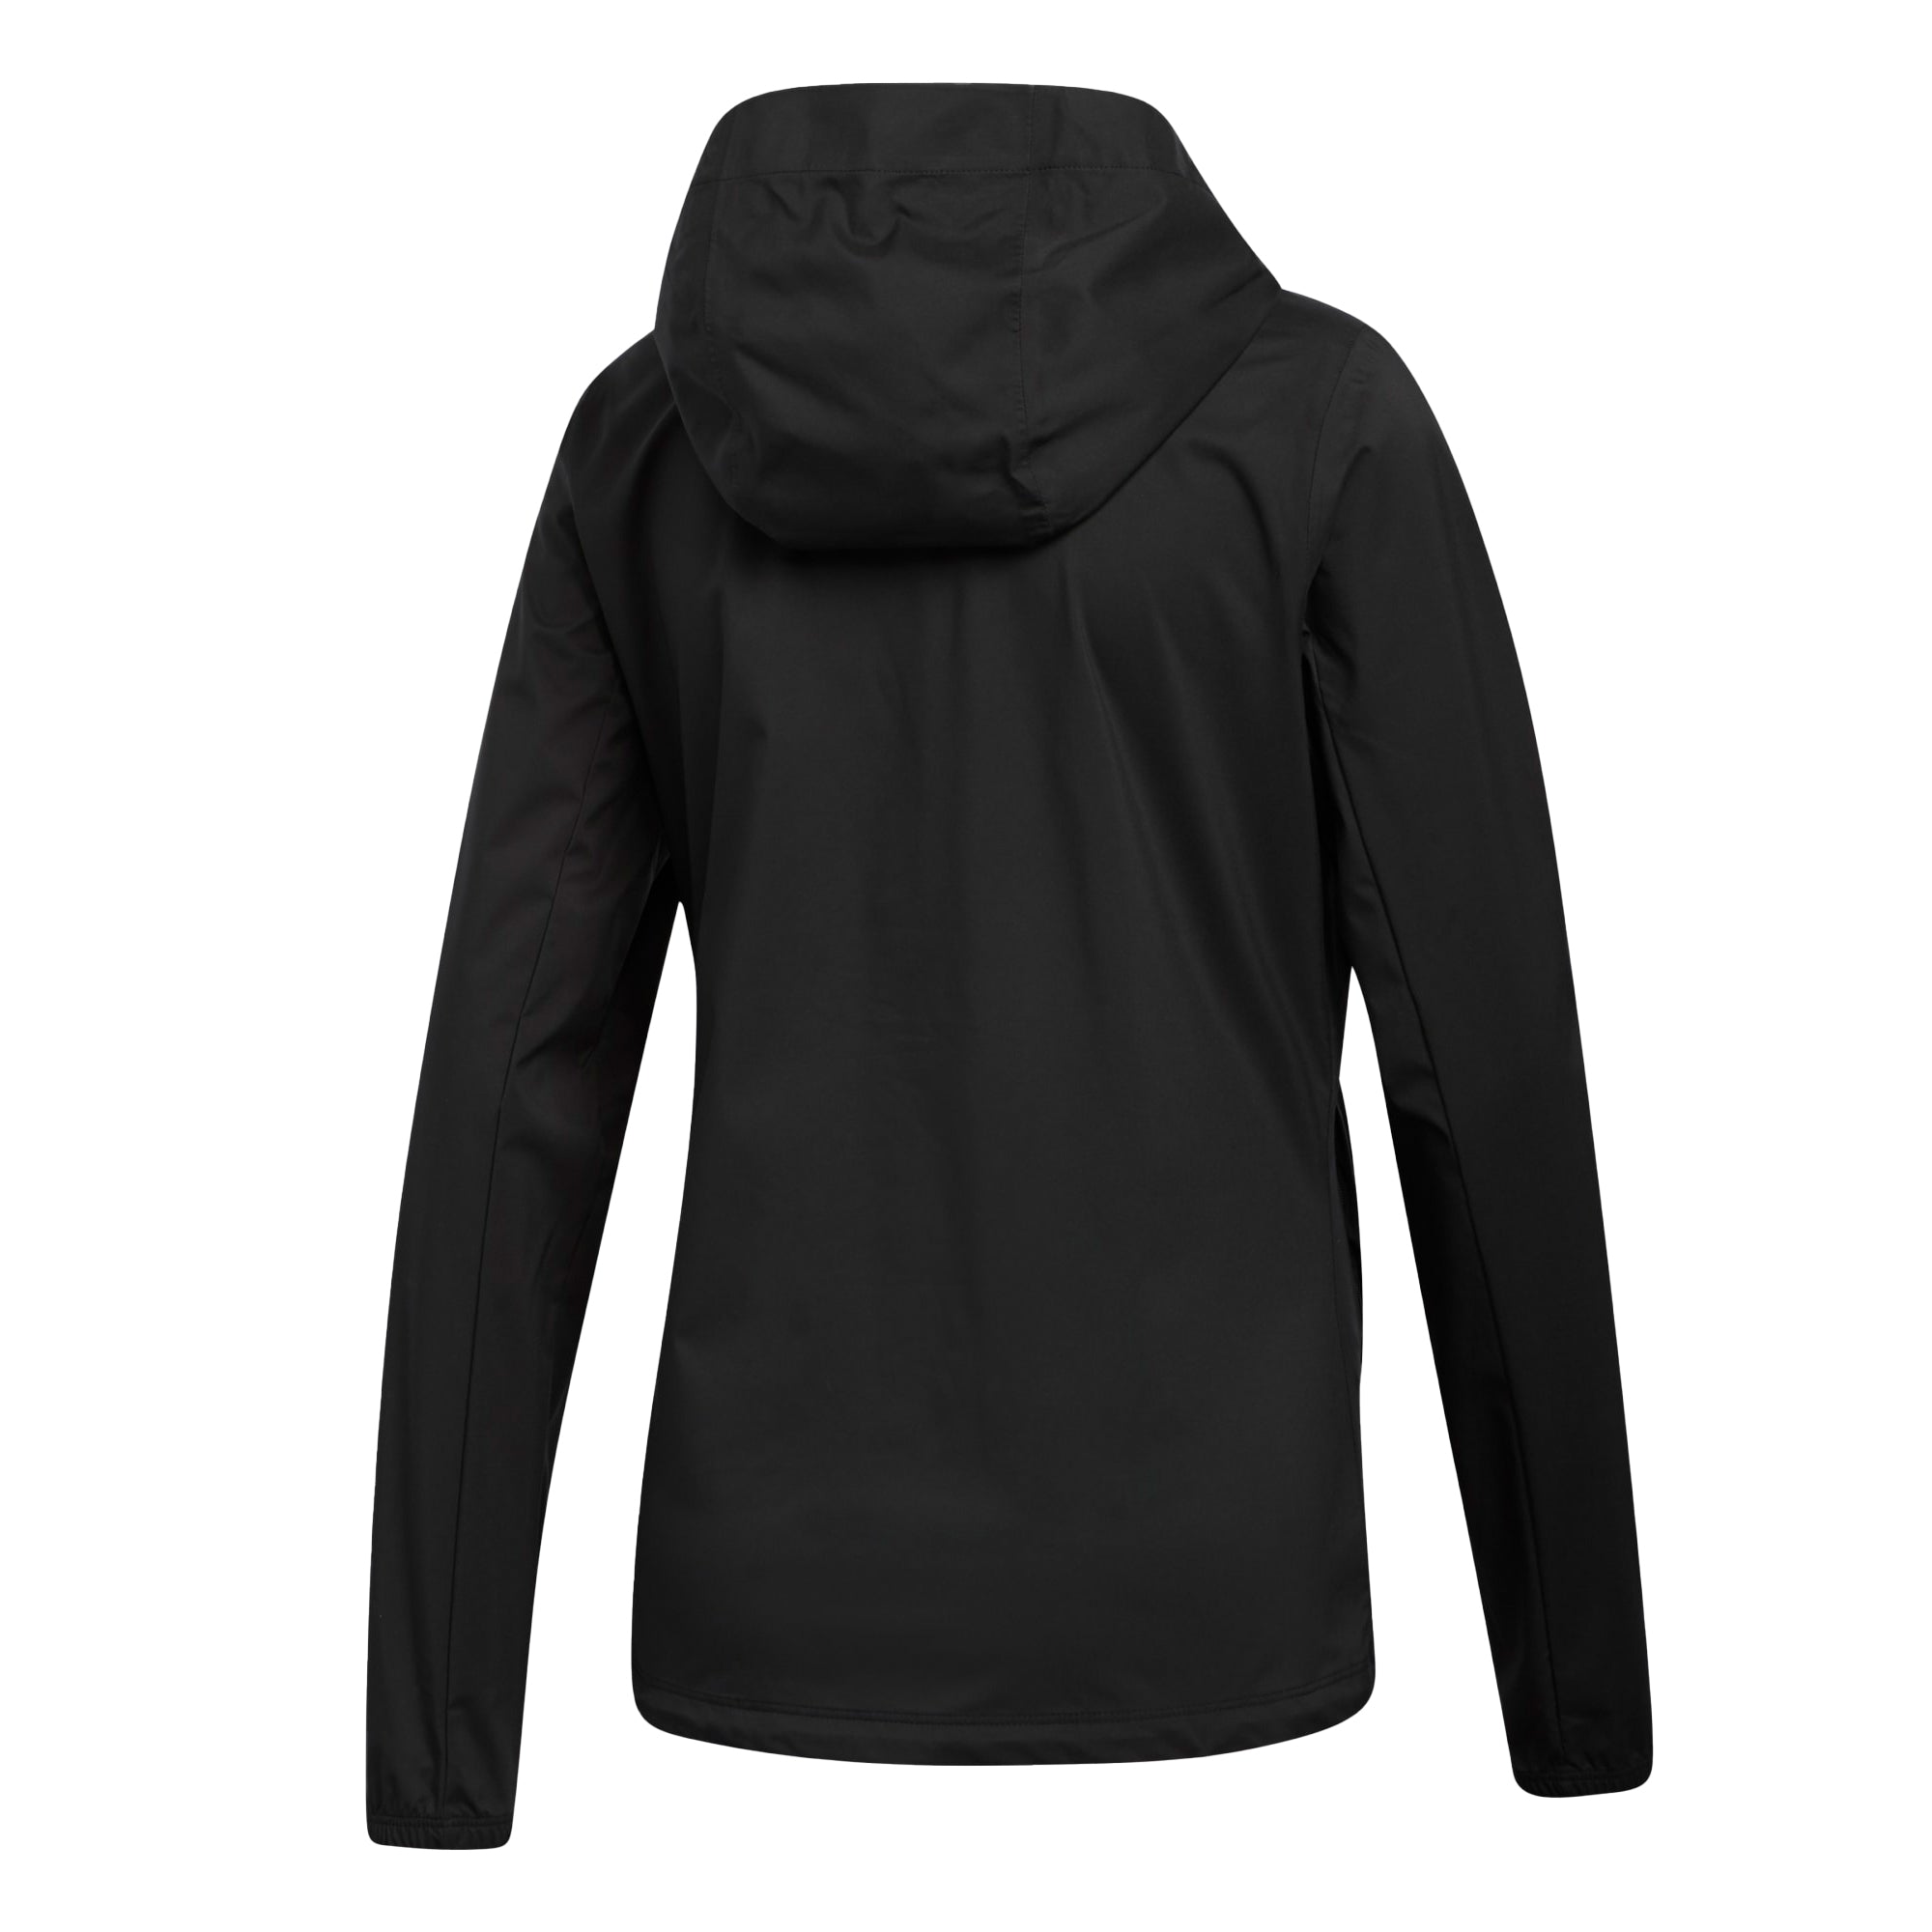 Adidas Womens Provisional Jacket - Black